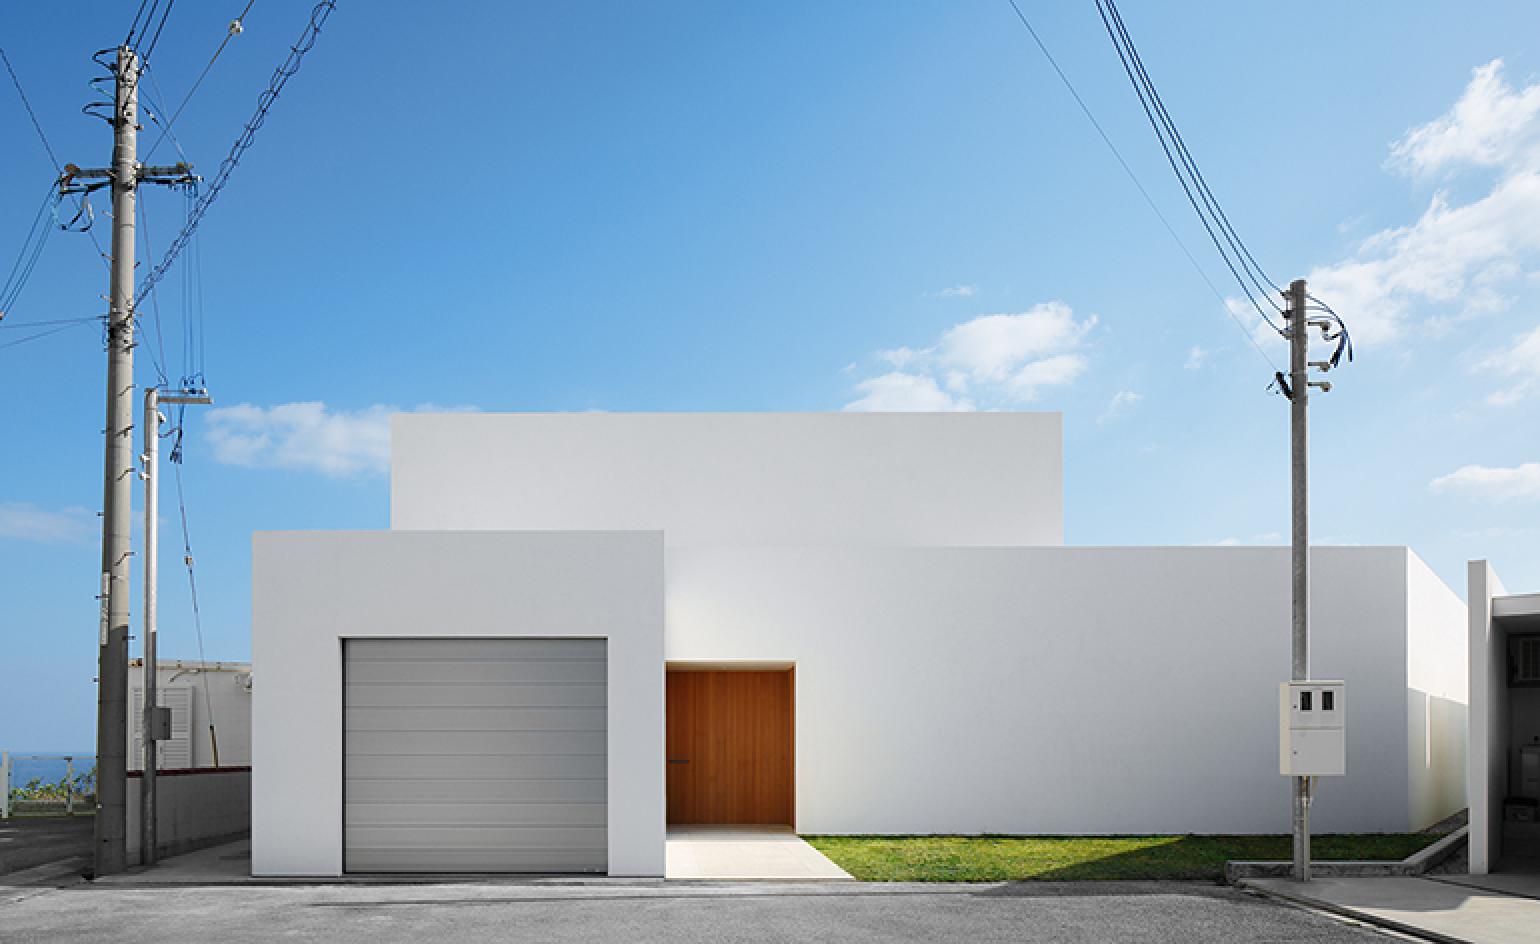 fondo de pantalla de arquitectura minimalista,arquitectura,casa,edificio,cielo,línea eléctrica aérea